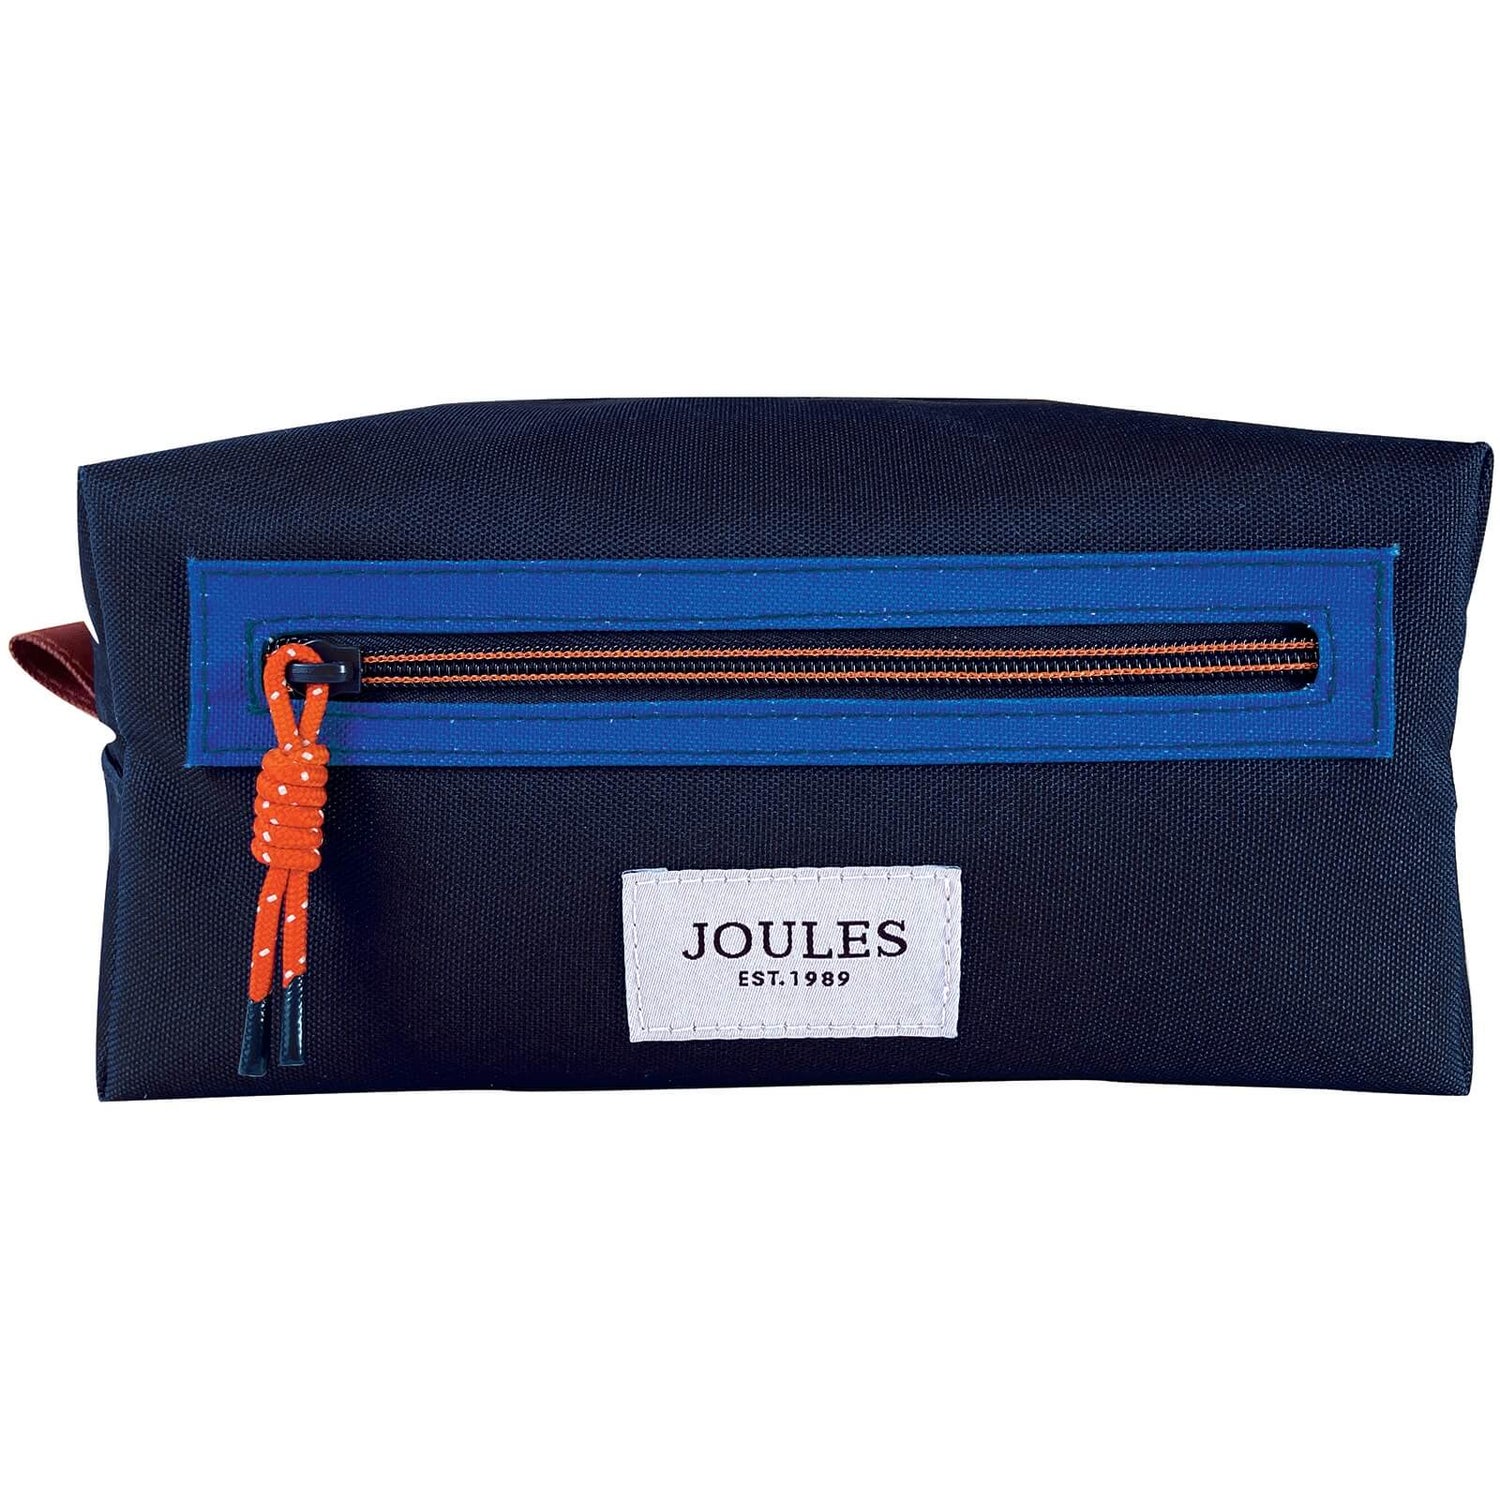 Joules Wash Bag